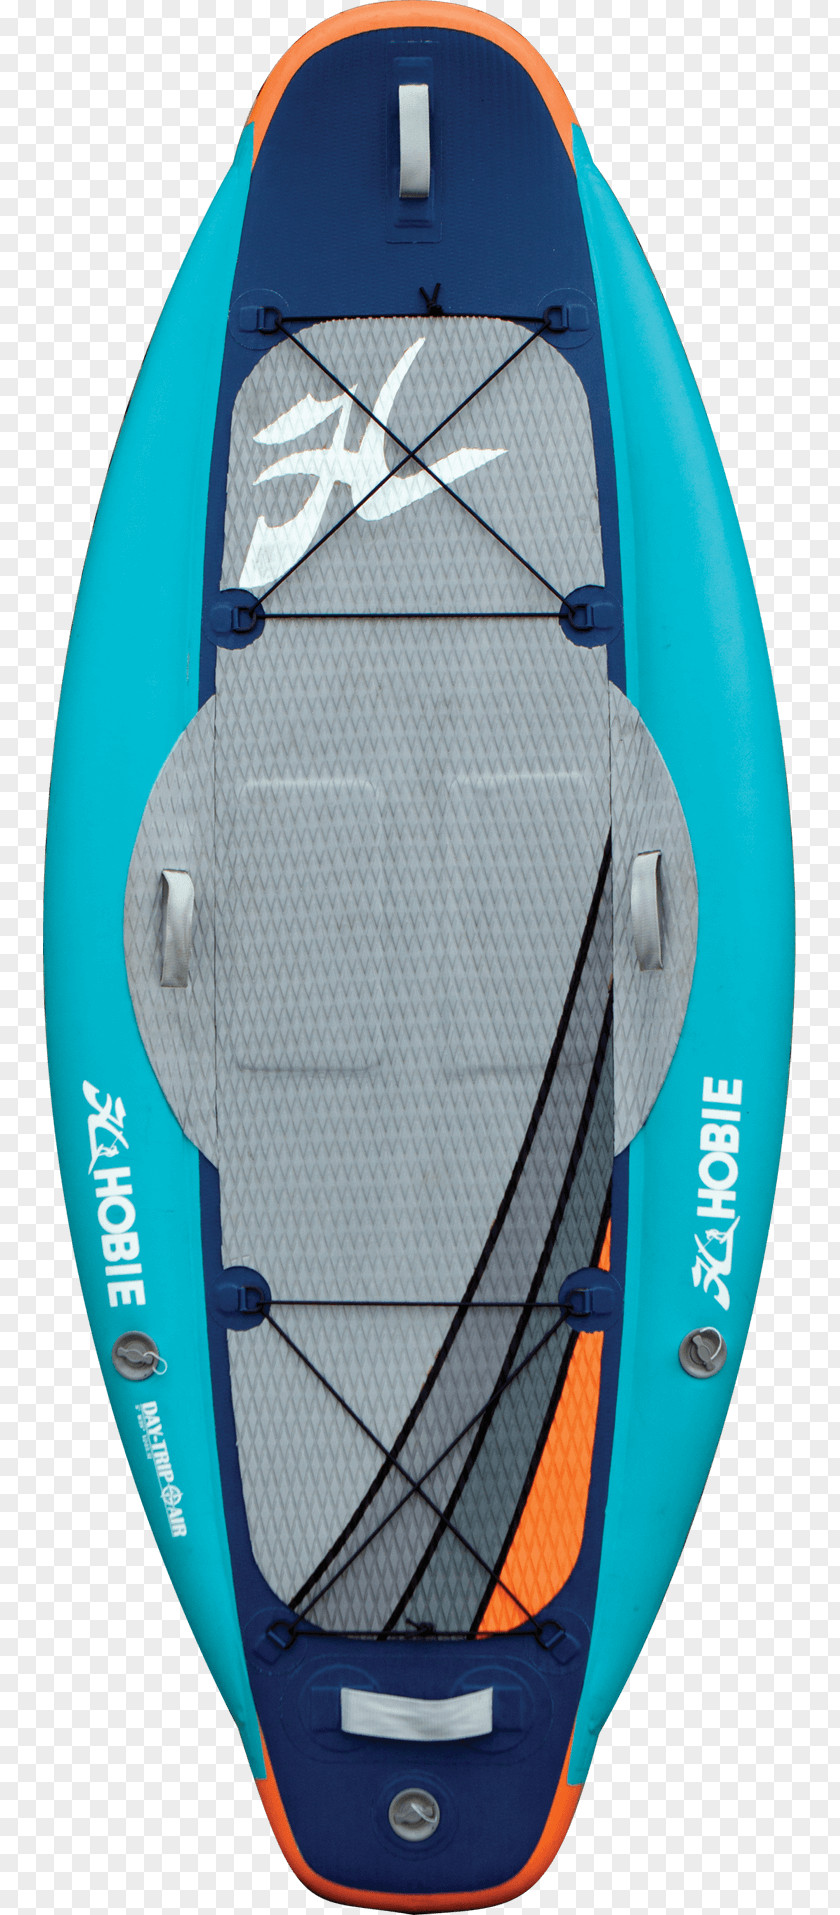 Boat Surfboard Standup Paddleboarding Outboard Motor Kayak PNG